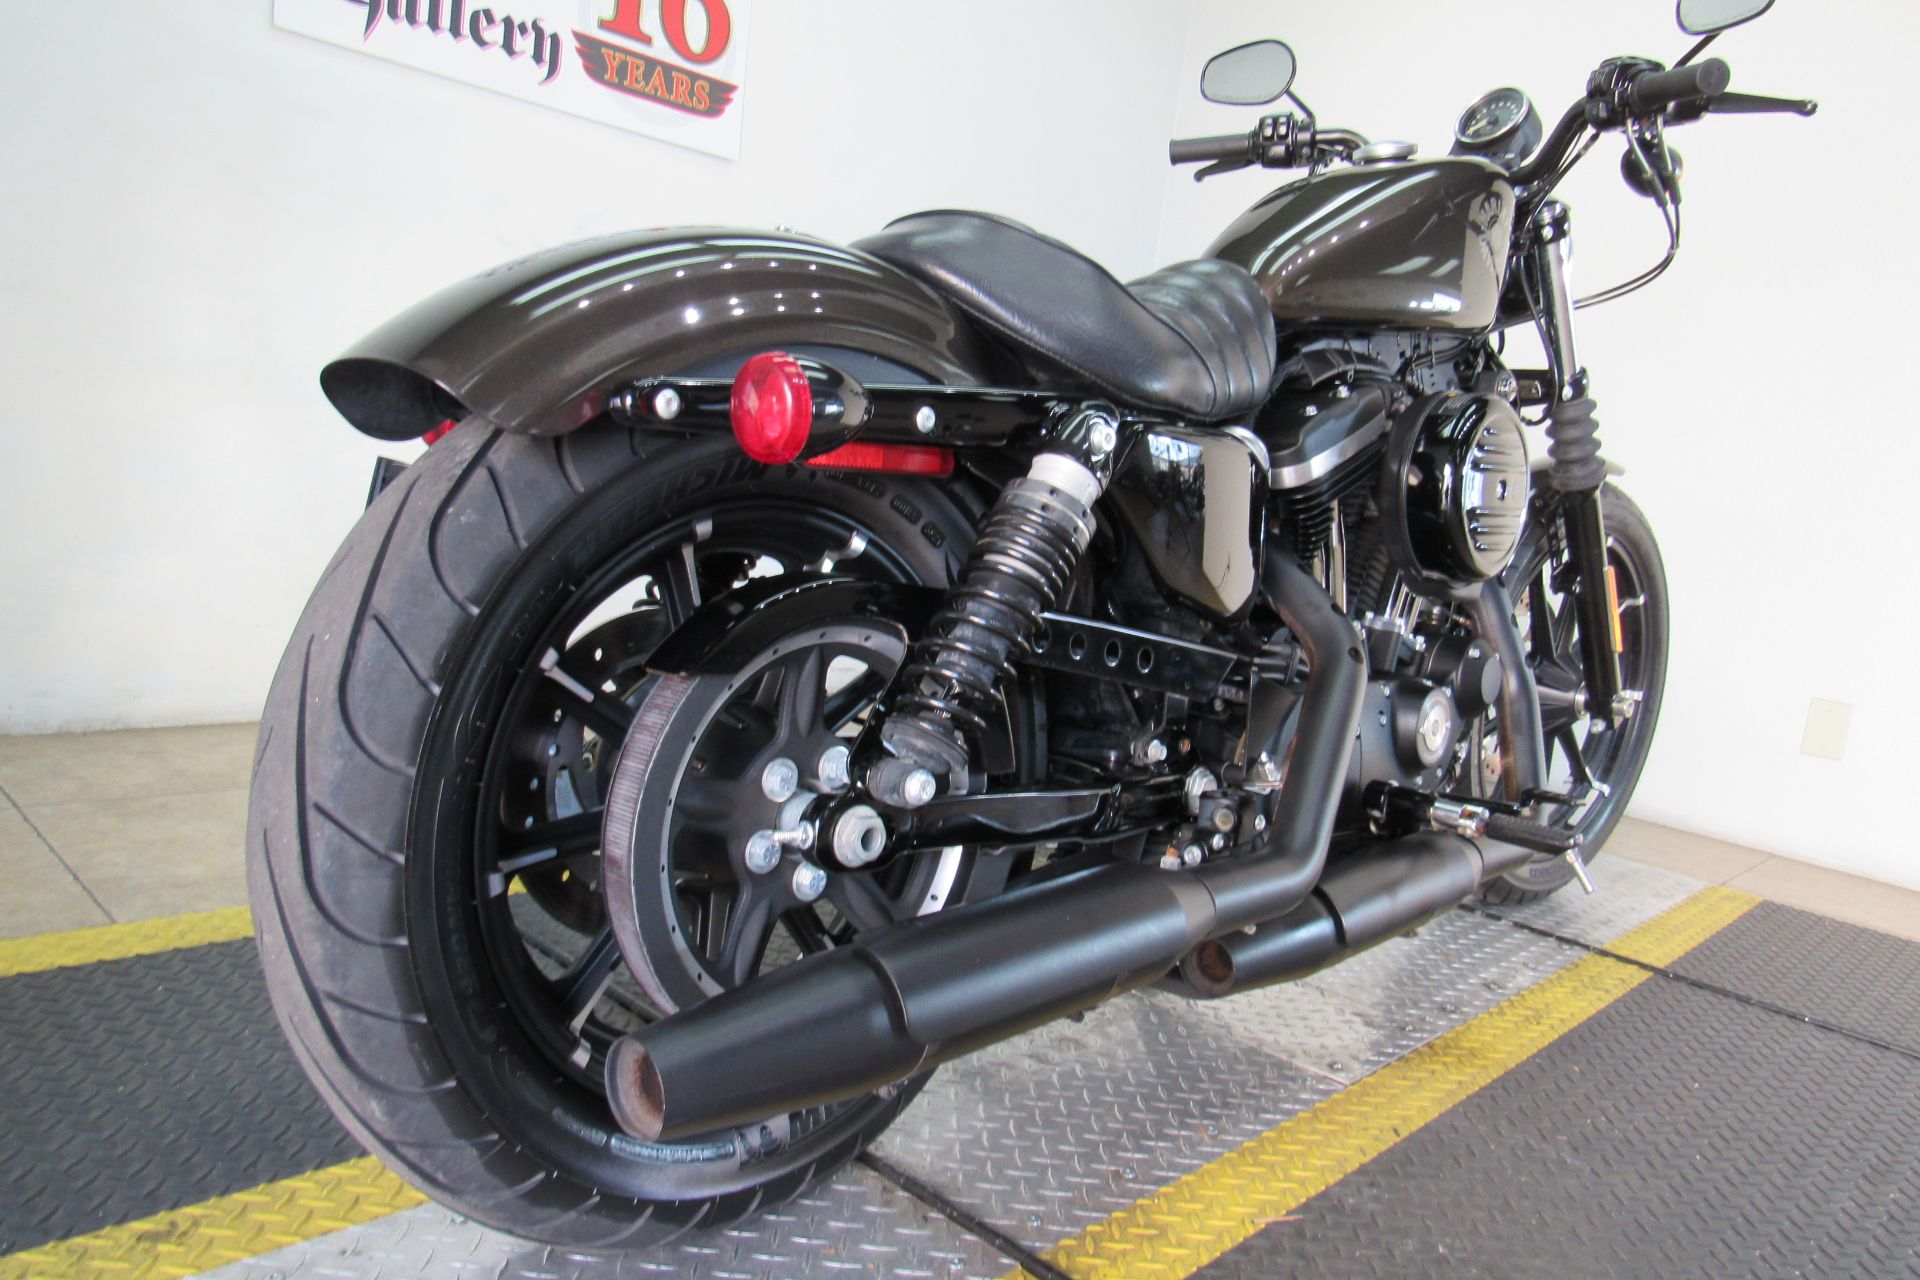 2020 Harley-Davidson Iron 883™ in Temecula, California - Photo 31